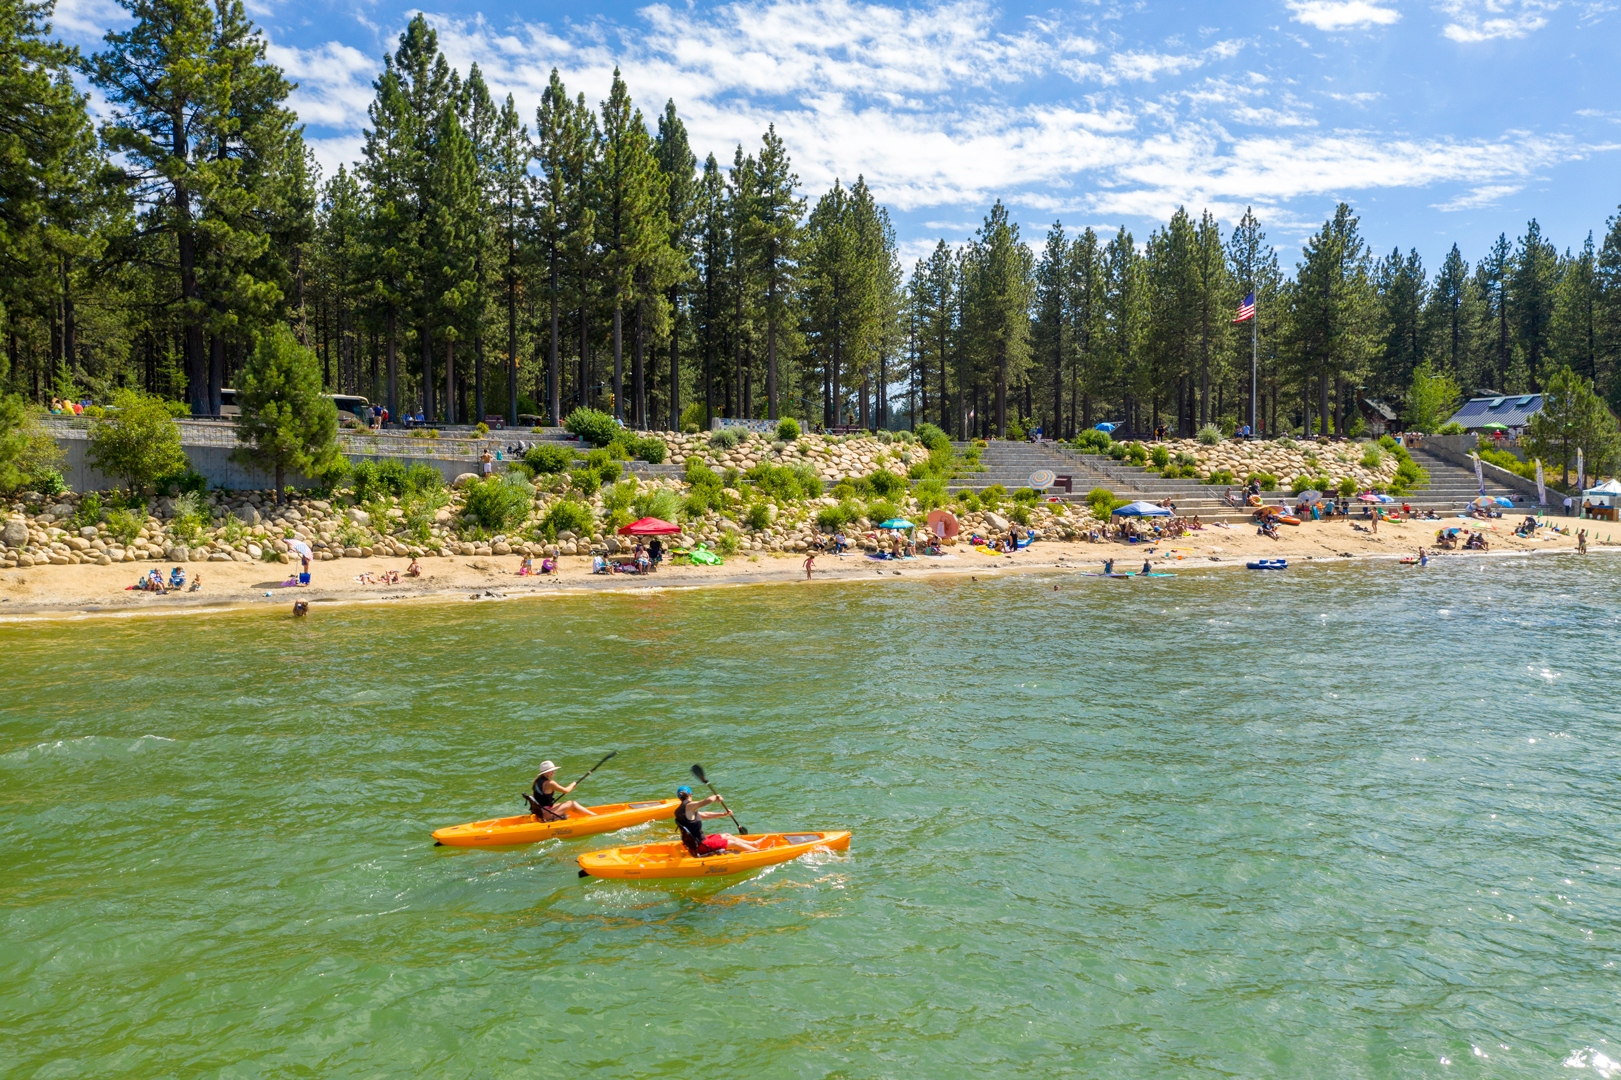 Kayakers paddling by El Dorado Beach / Lakeview Commons in South Lake Tahoe